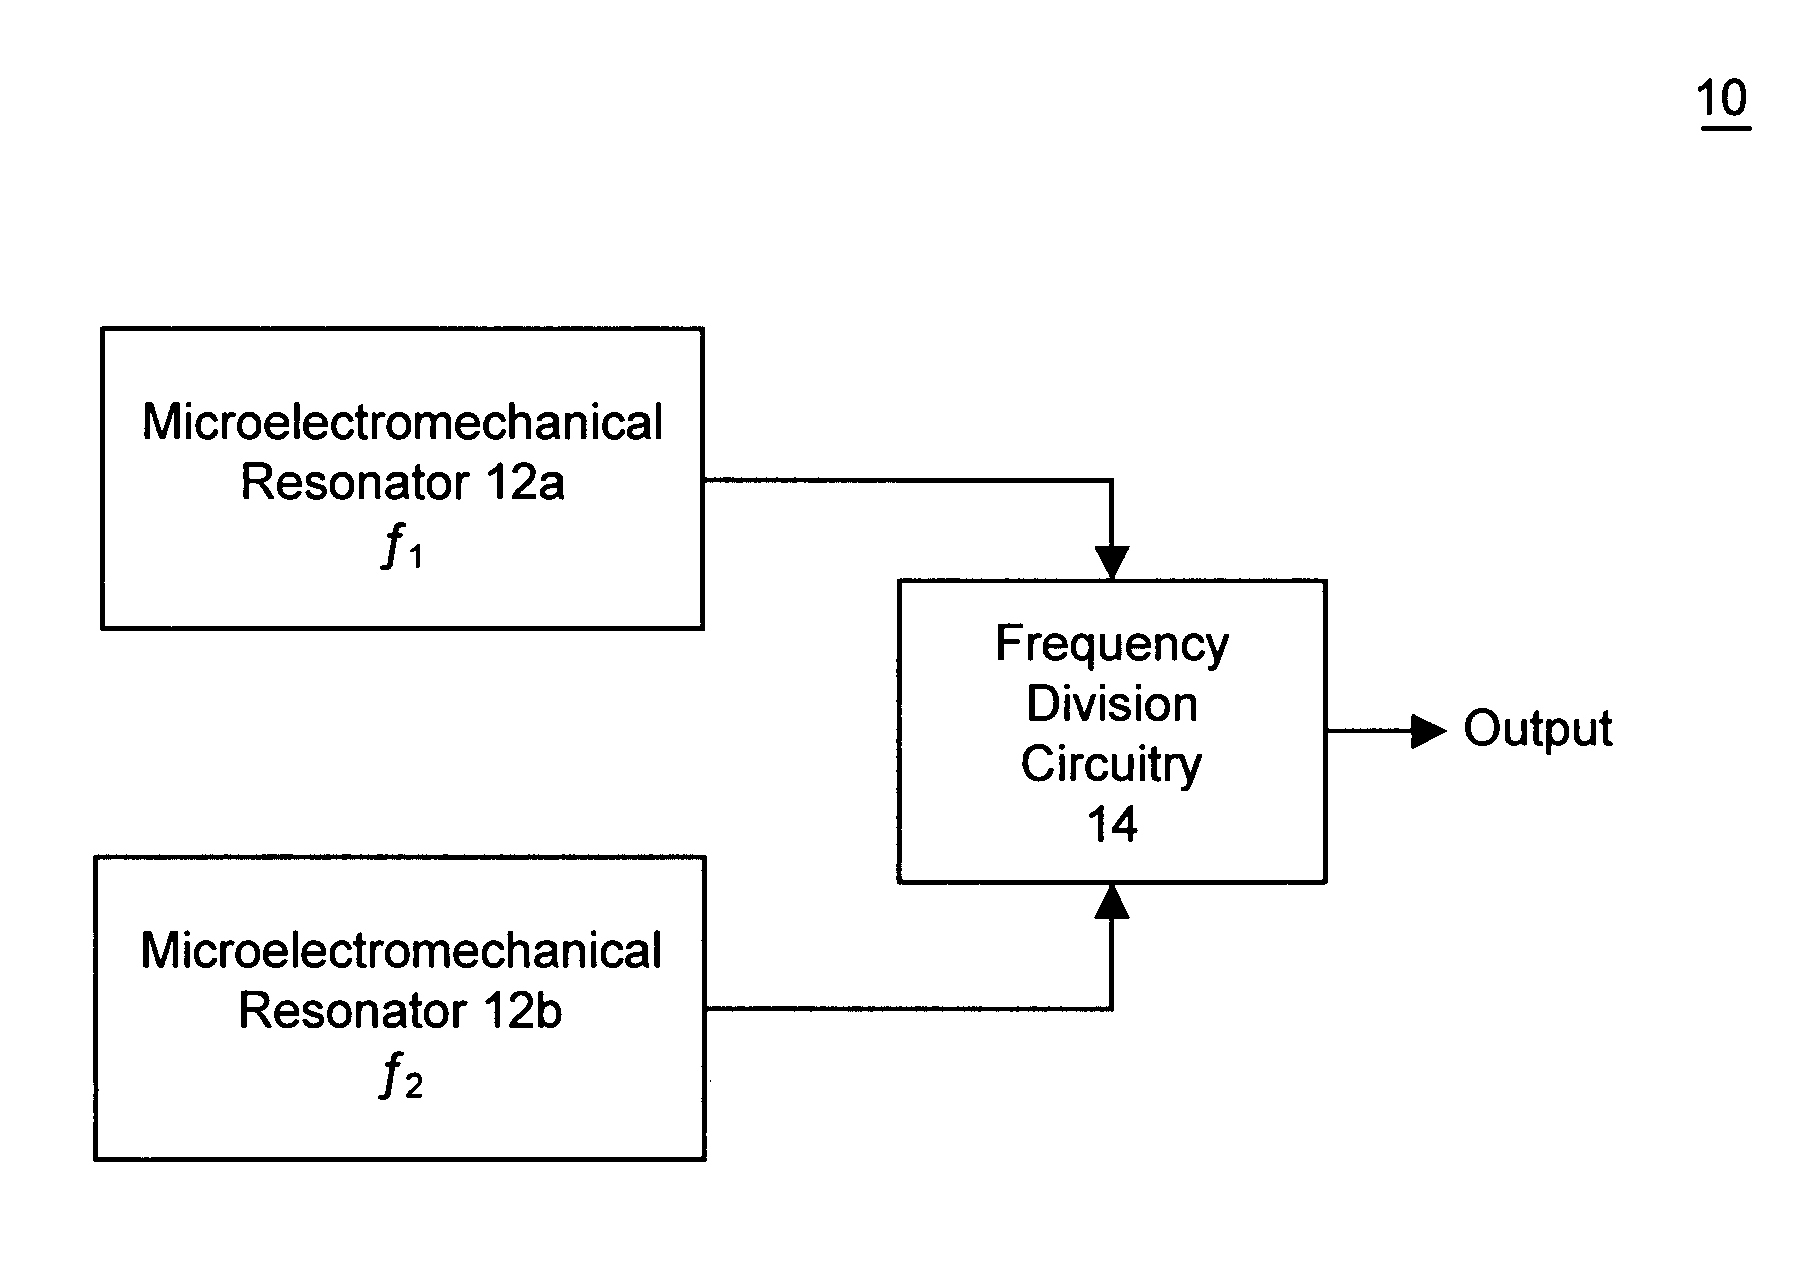 Microelectromechanical oscillator having temperature measurement system, and method of operating same